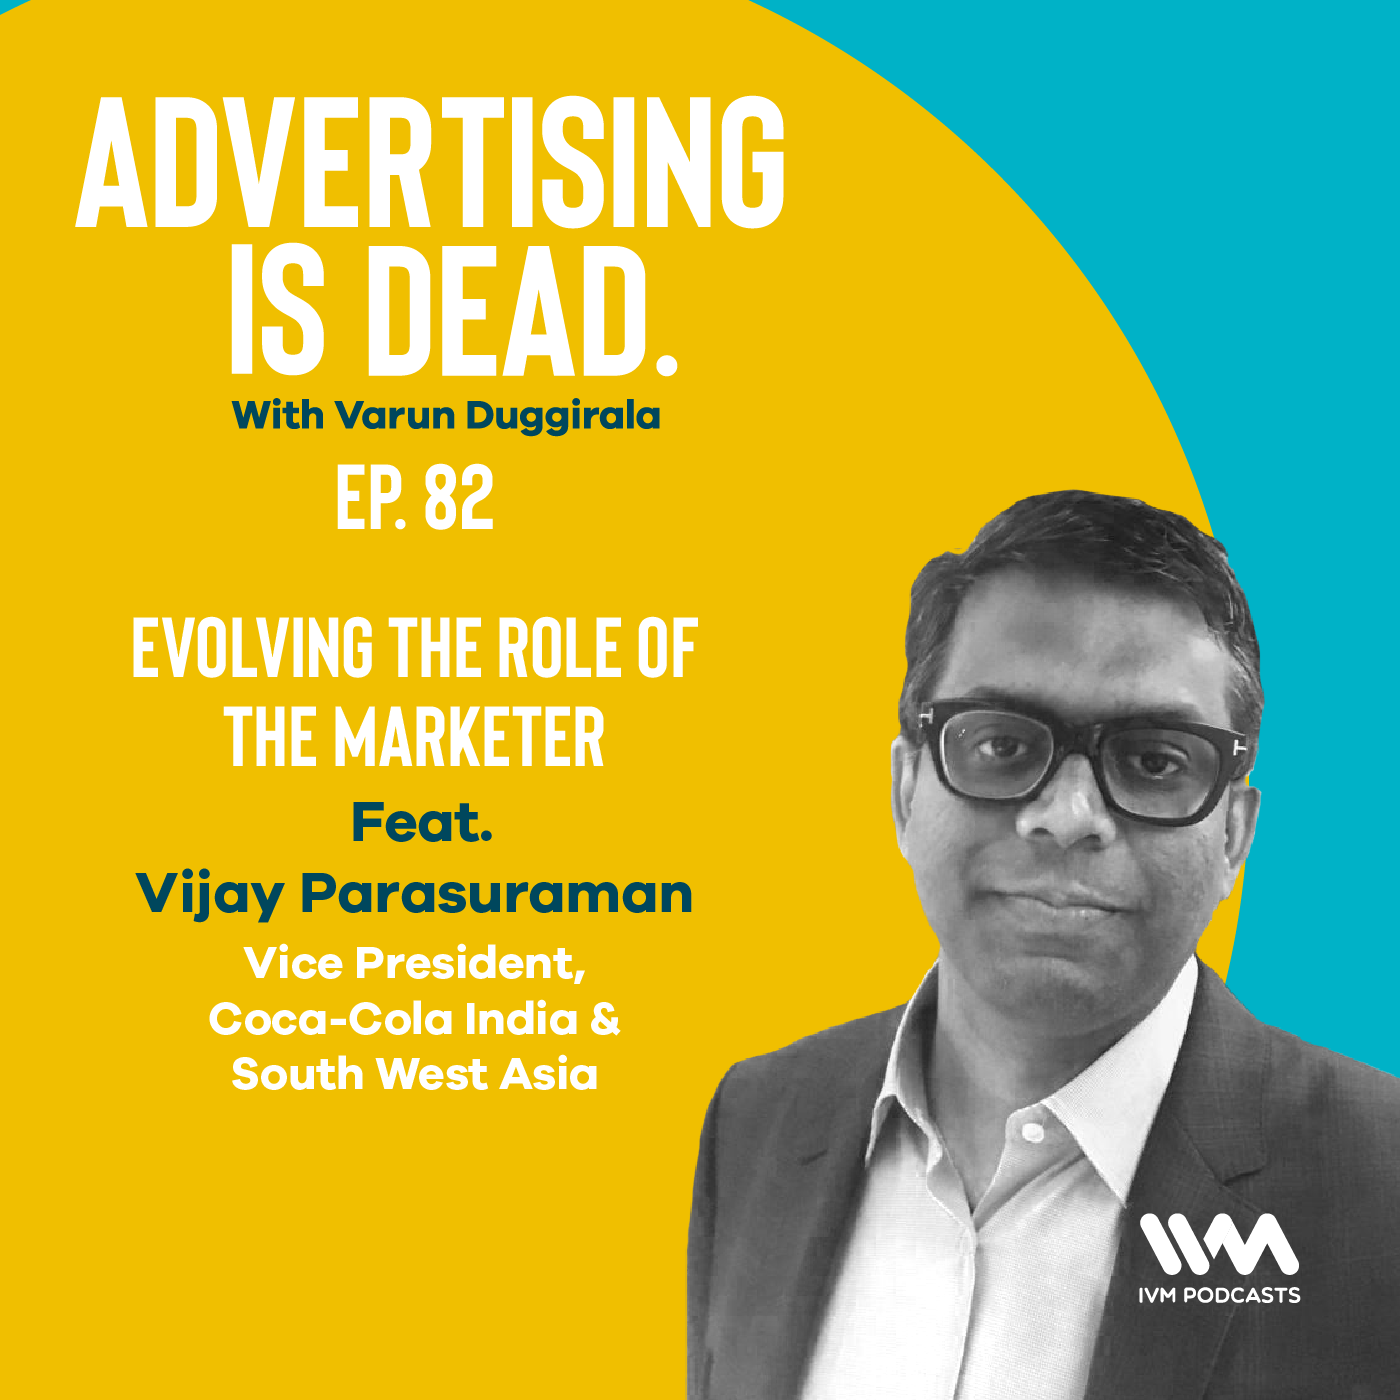 Vijay Parasuraman on Evolving the Role of the Marketer